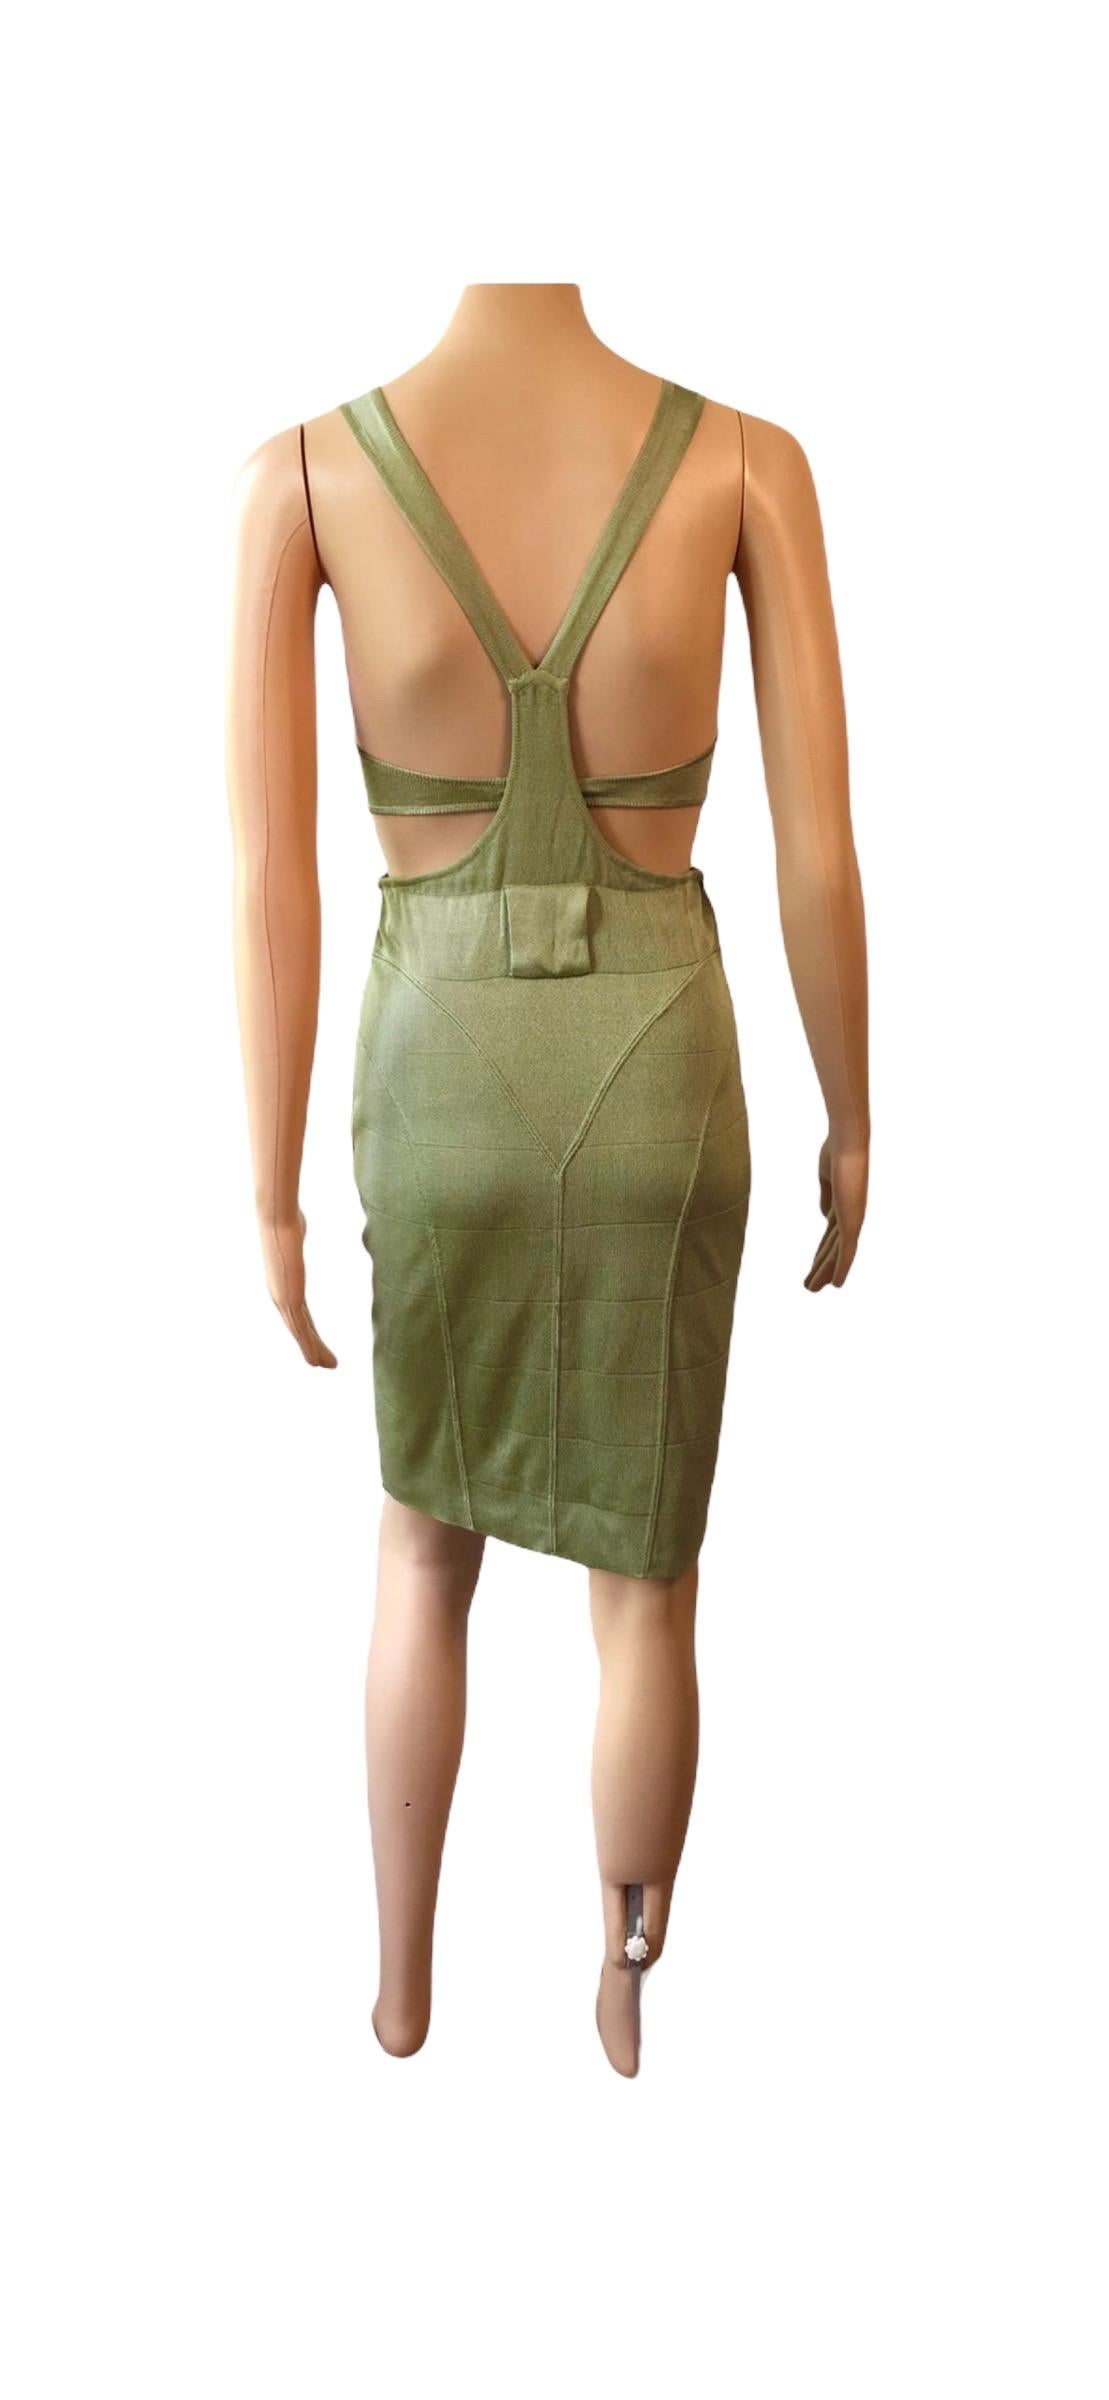 Azzedine Alaia S/S 1985 Vintage Plunged Cutout Bodycon Green Dress 8